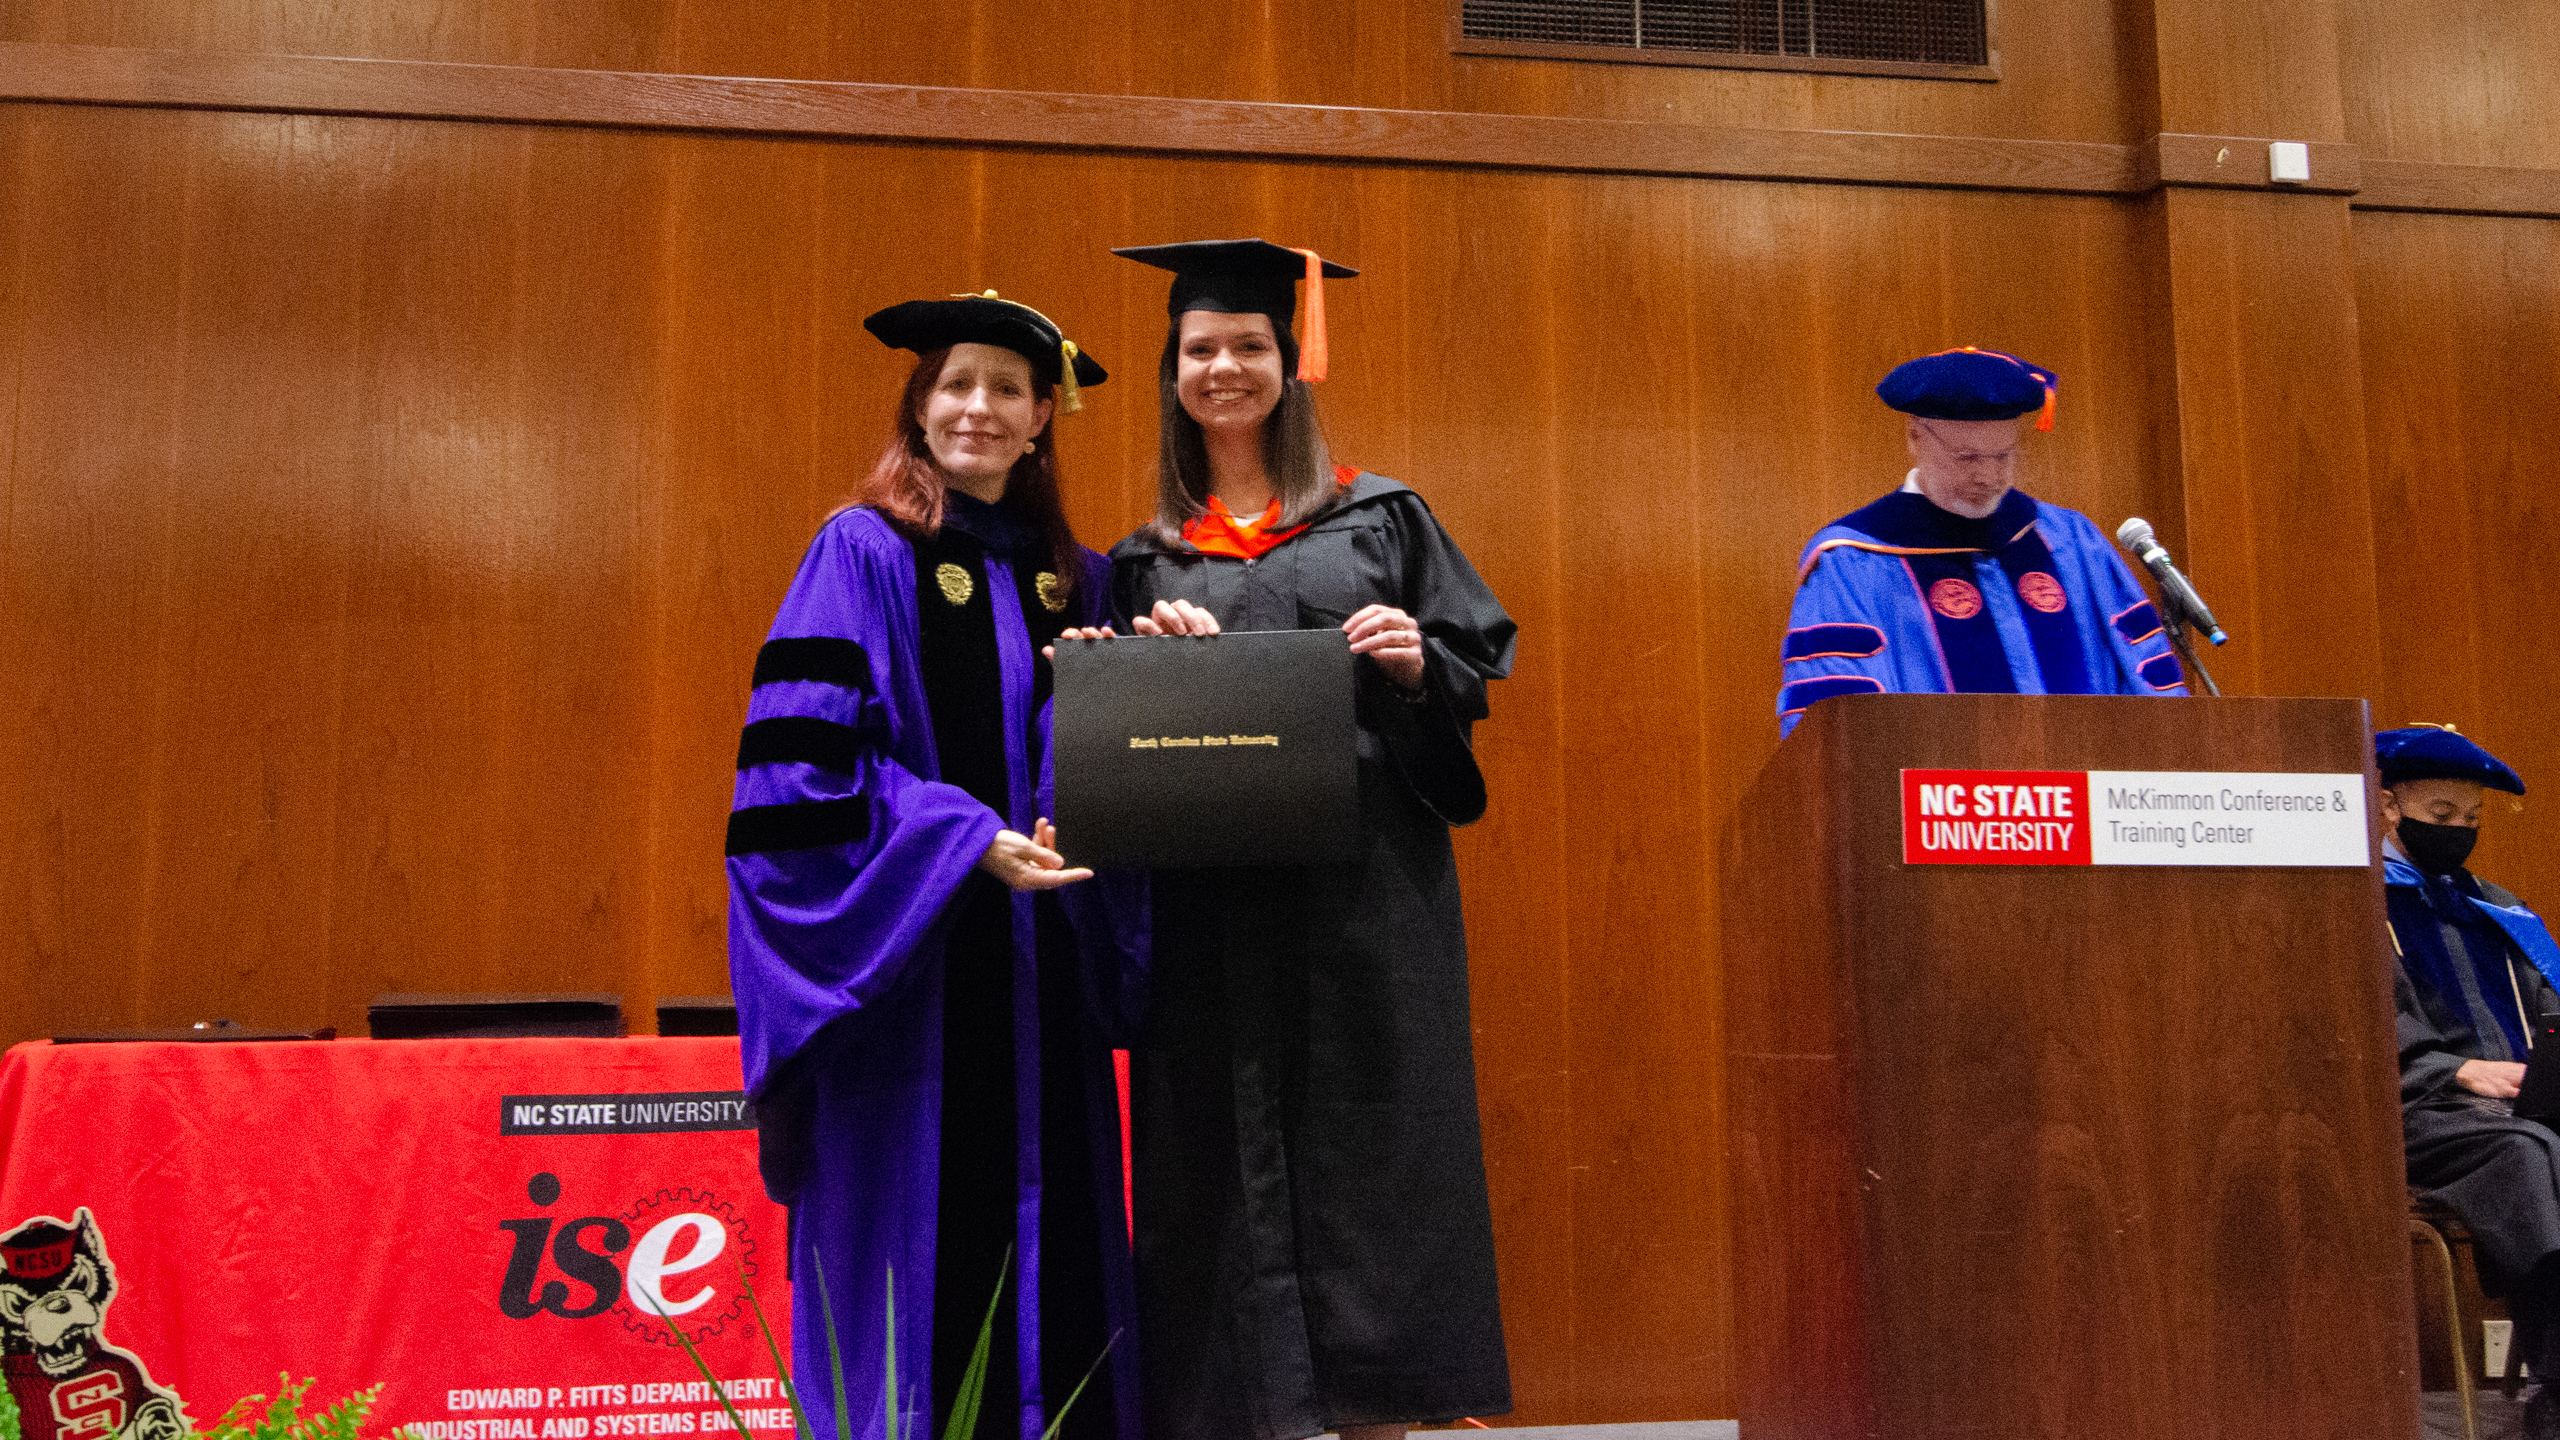 Juliana Pin receiving her diploma